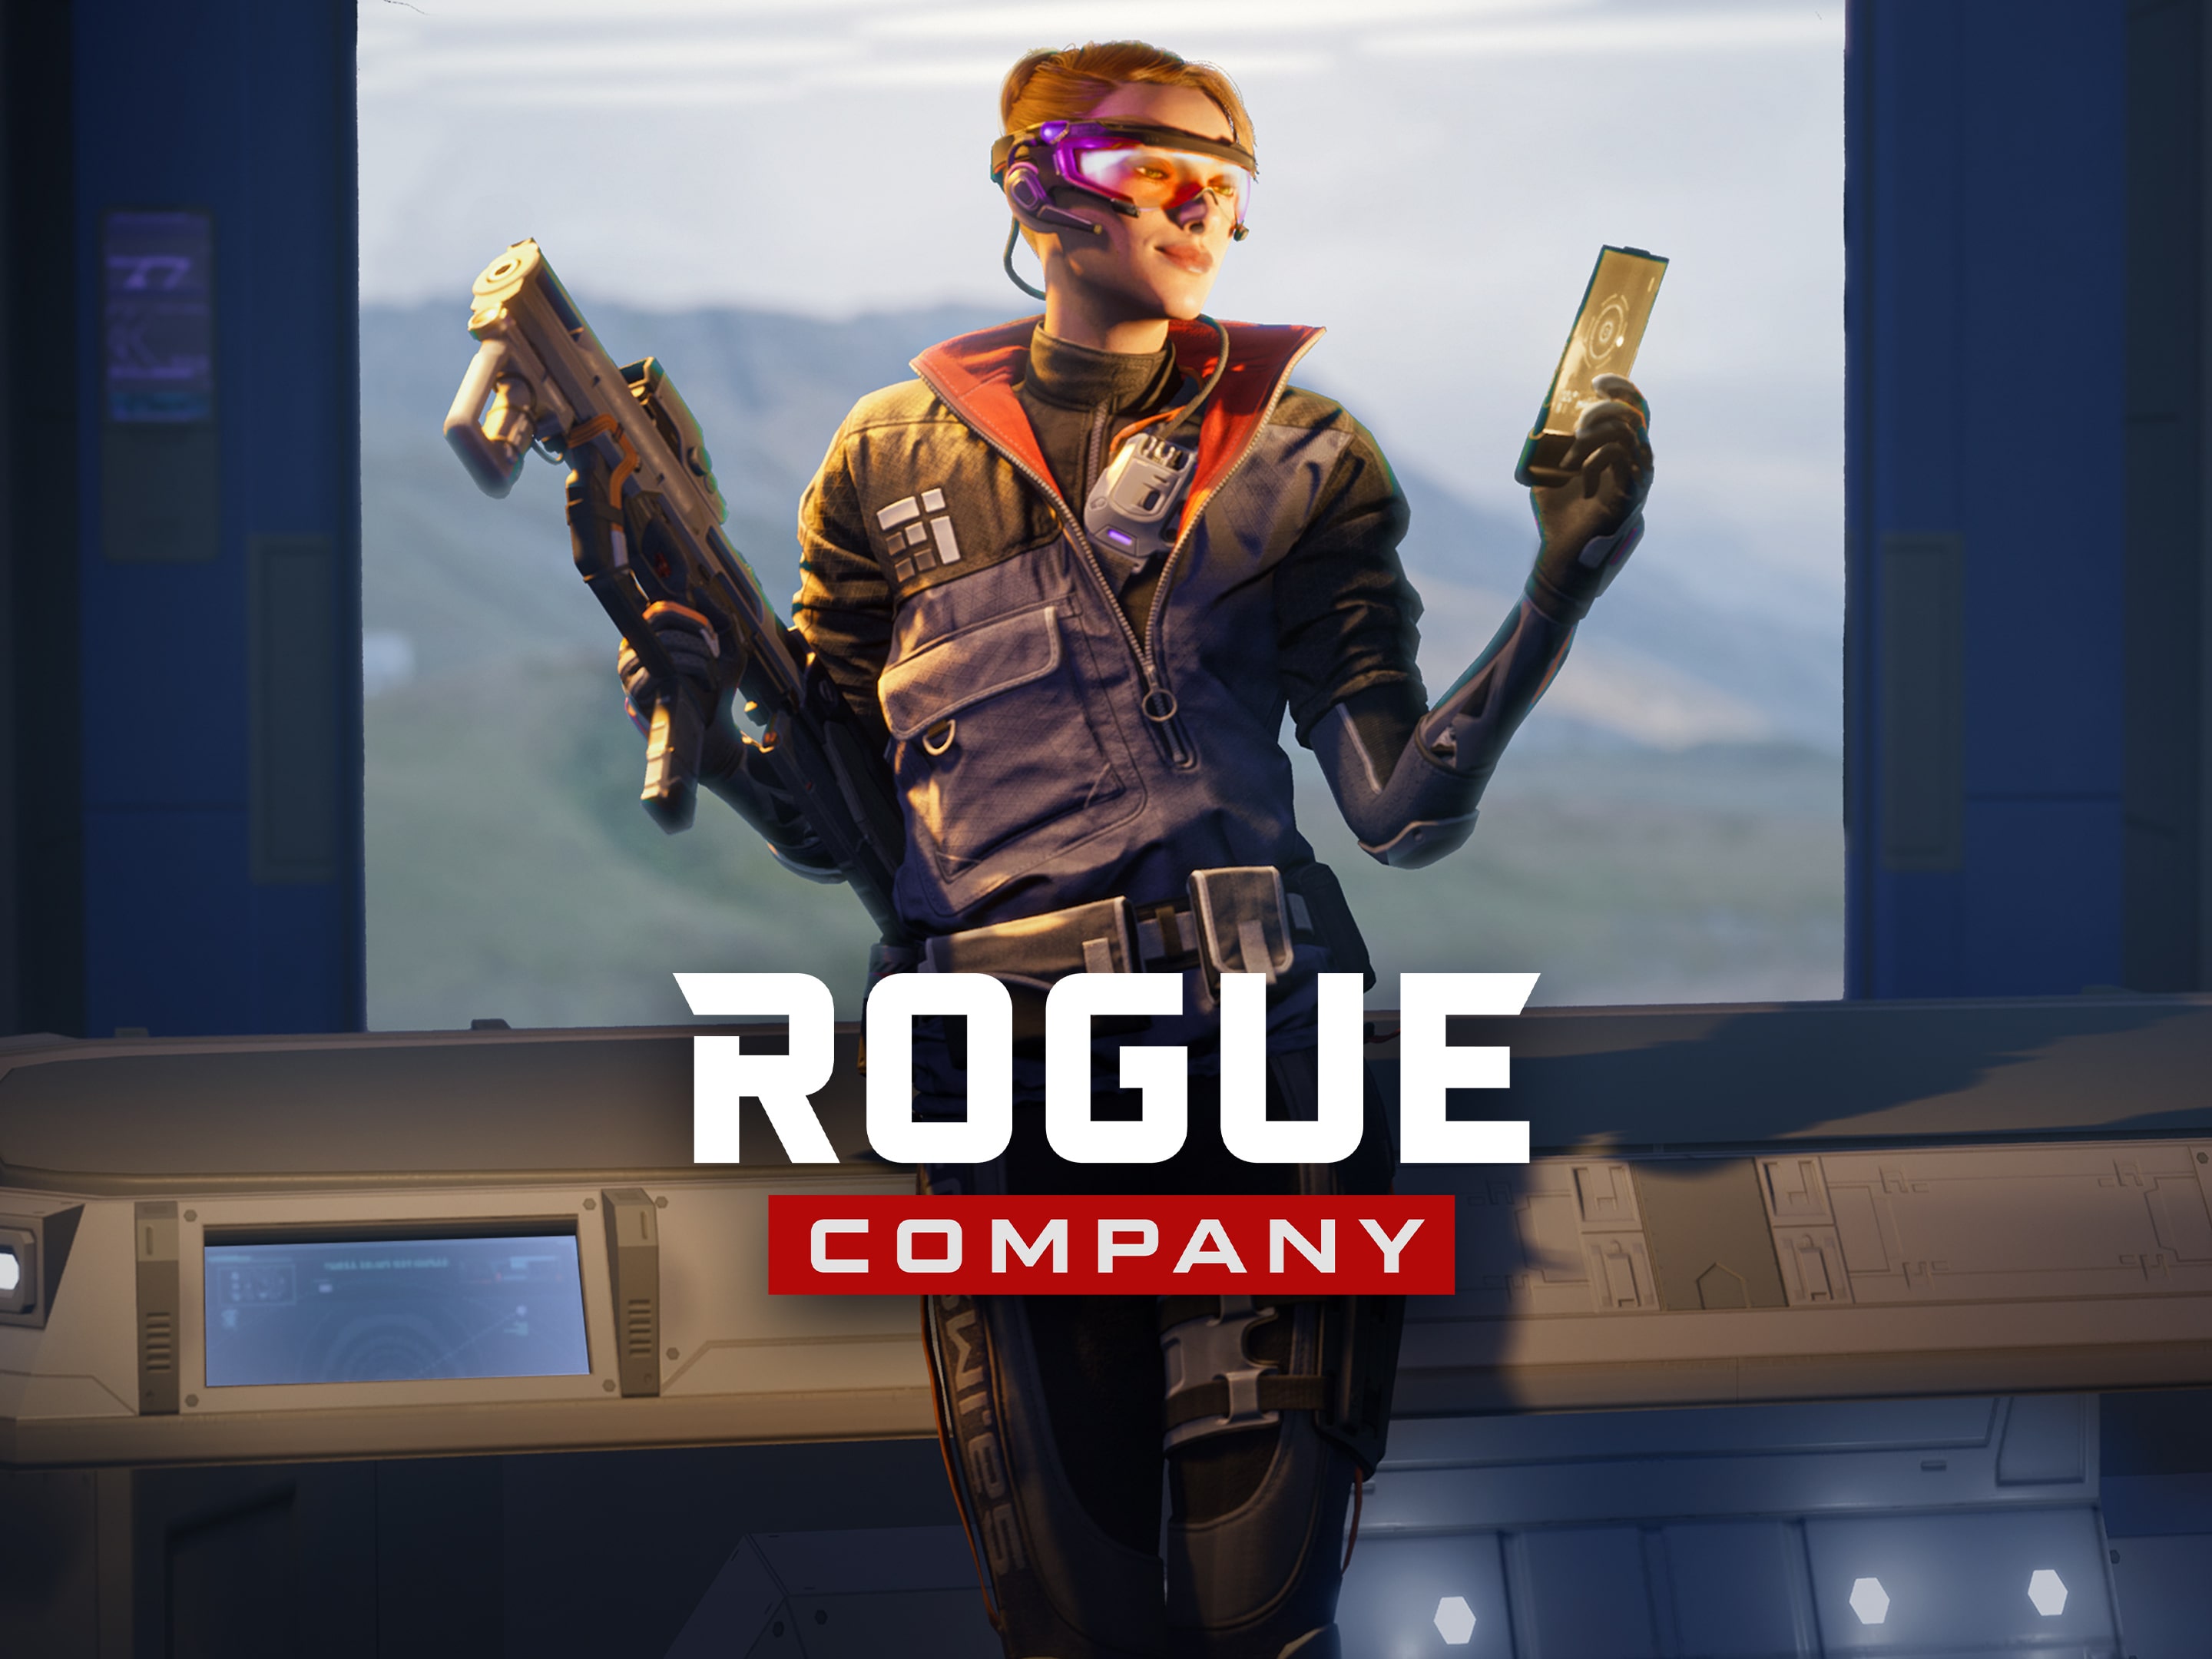 Juke Joins Rogue Company Alongside a Full Launch Celebration - Xbox Wire